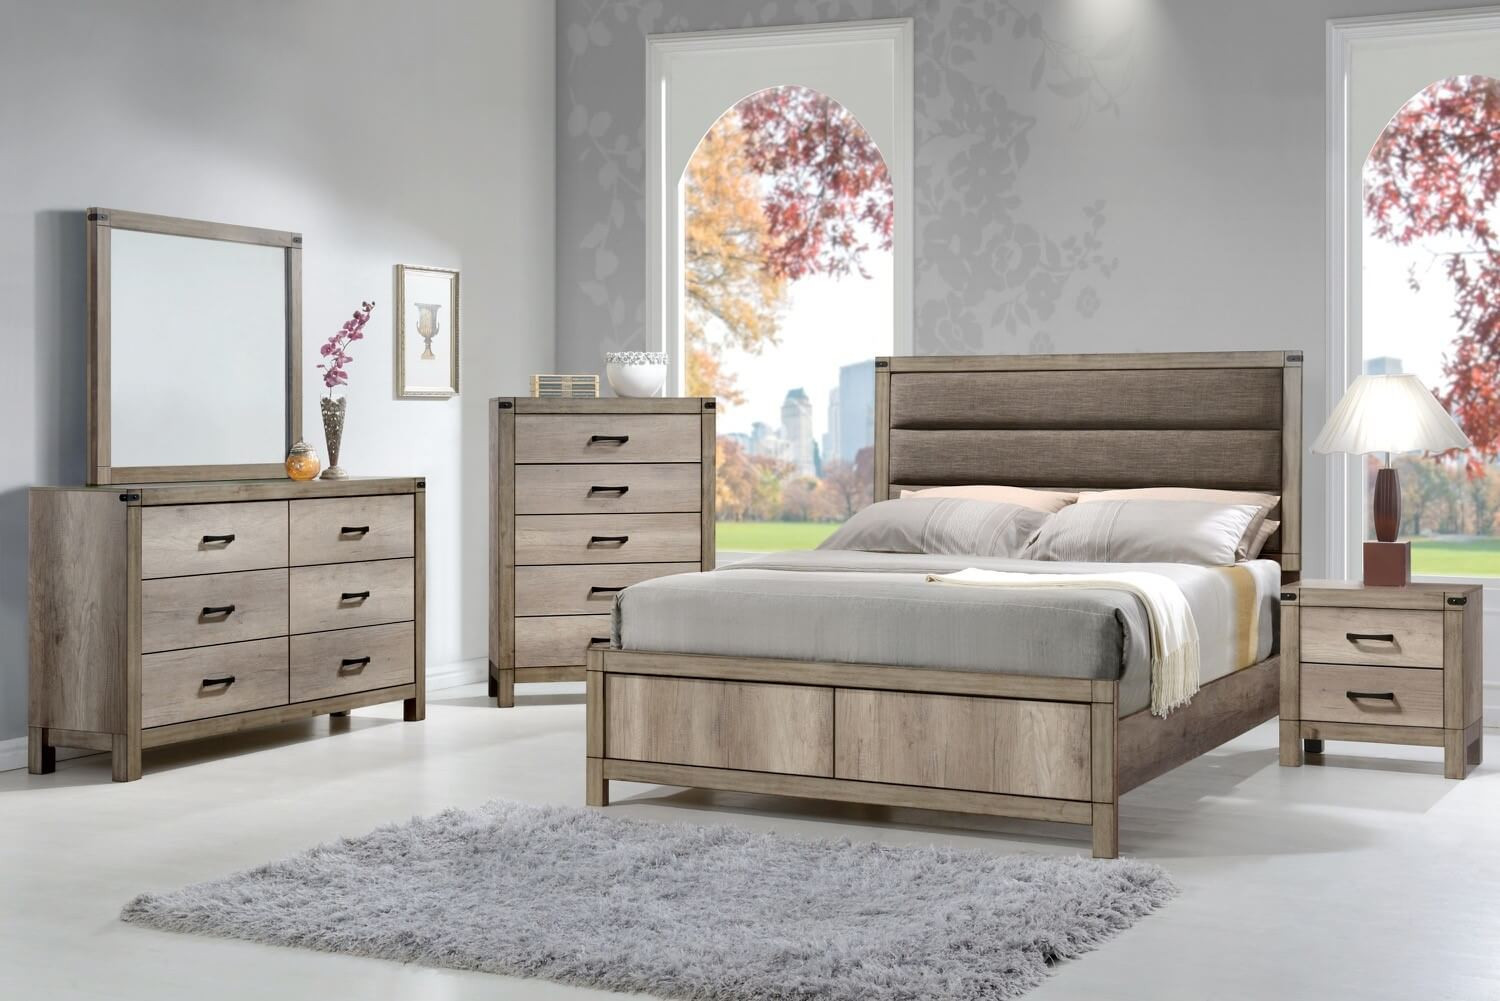 Rustic Bedroom Furniture Sets
 Matteo Rustic Bedroom Set by Crown Mark